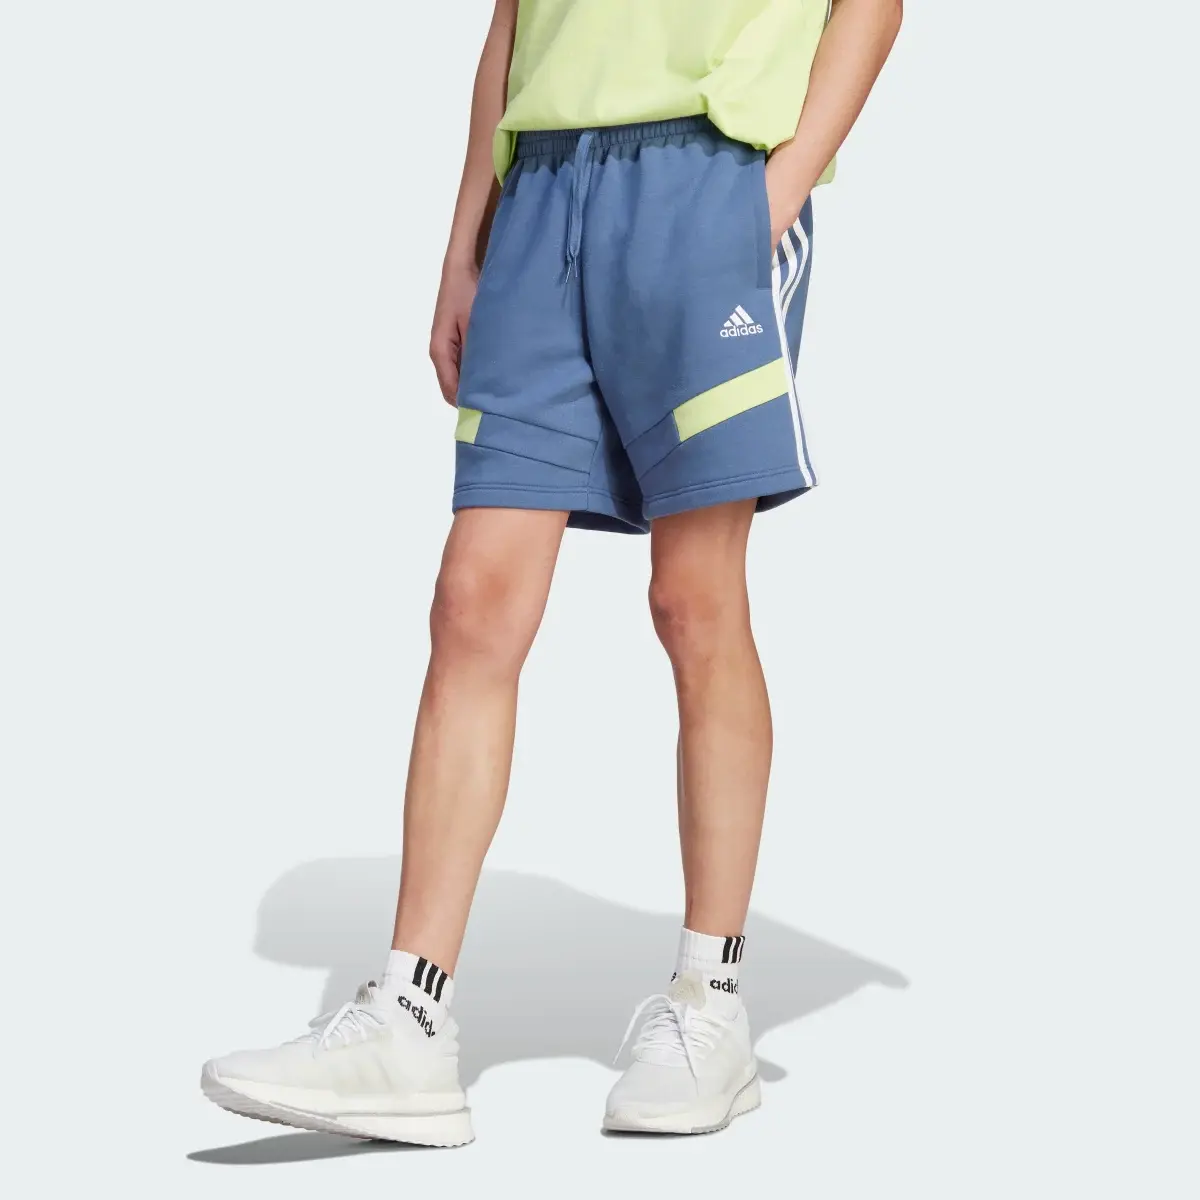 Adidas Colourblock Shorts. 1